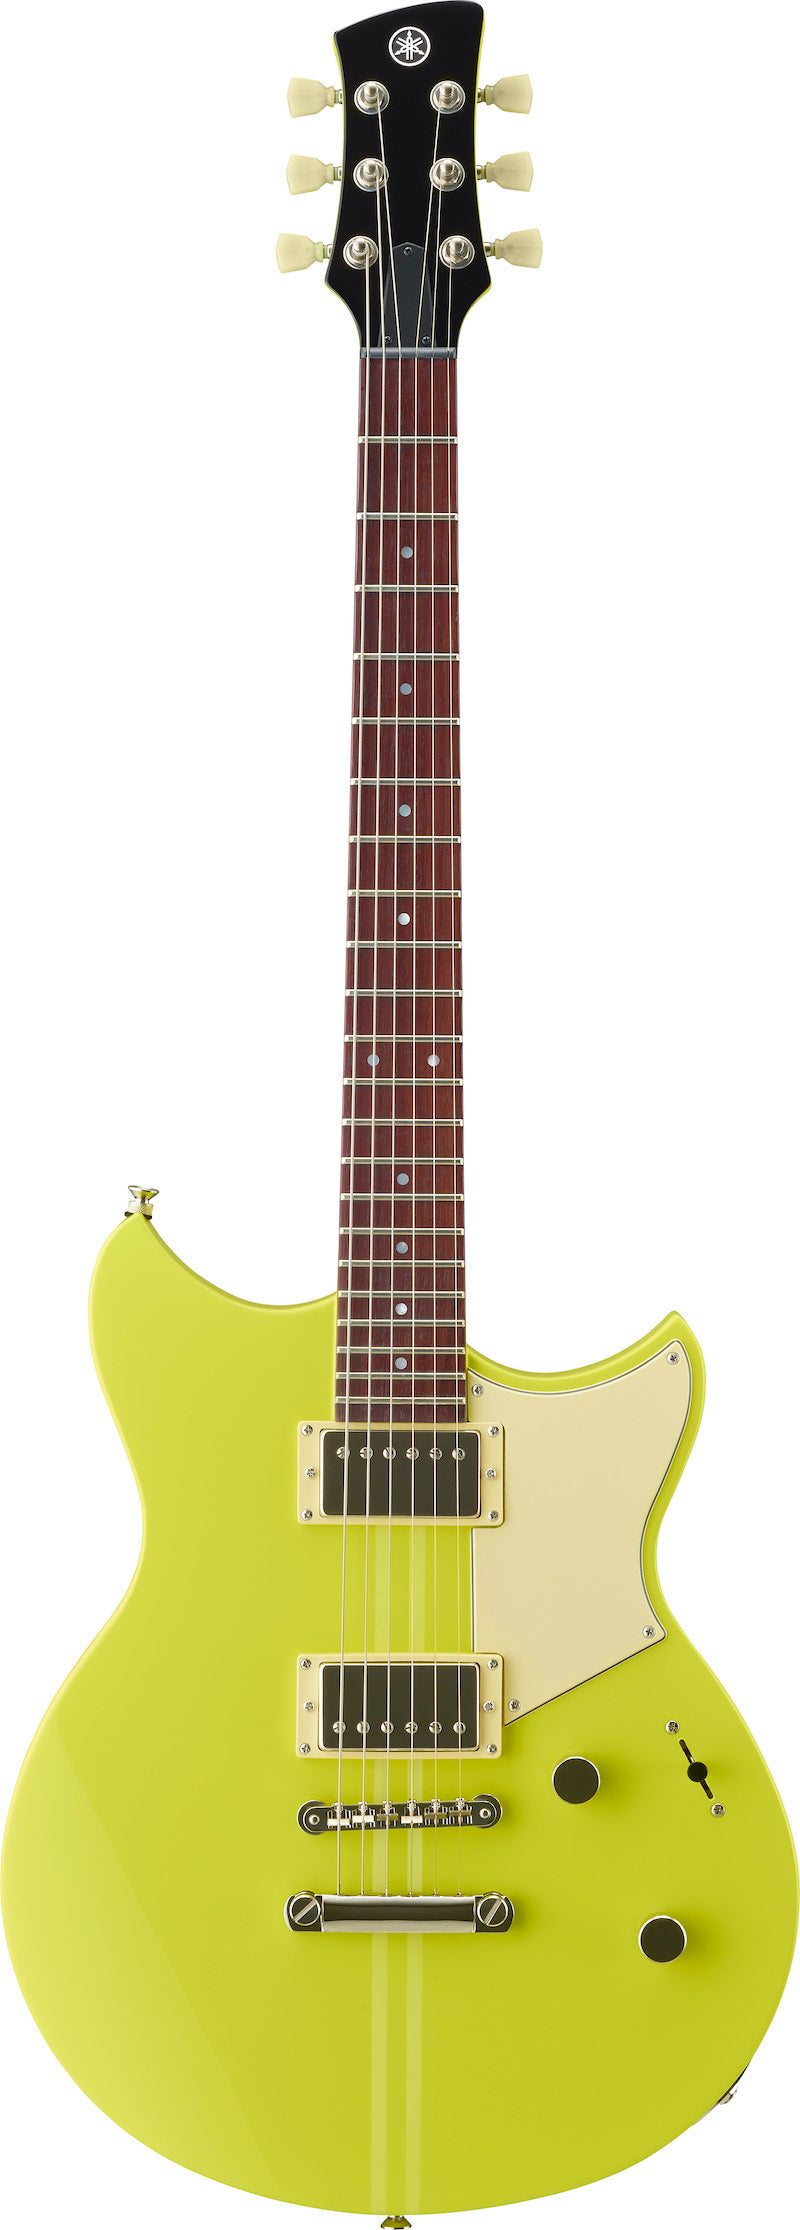 Yamaha Revstar RSE20 NY Electric Guitar - Neon Yellow